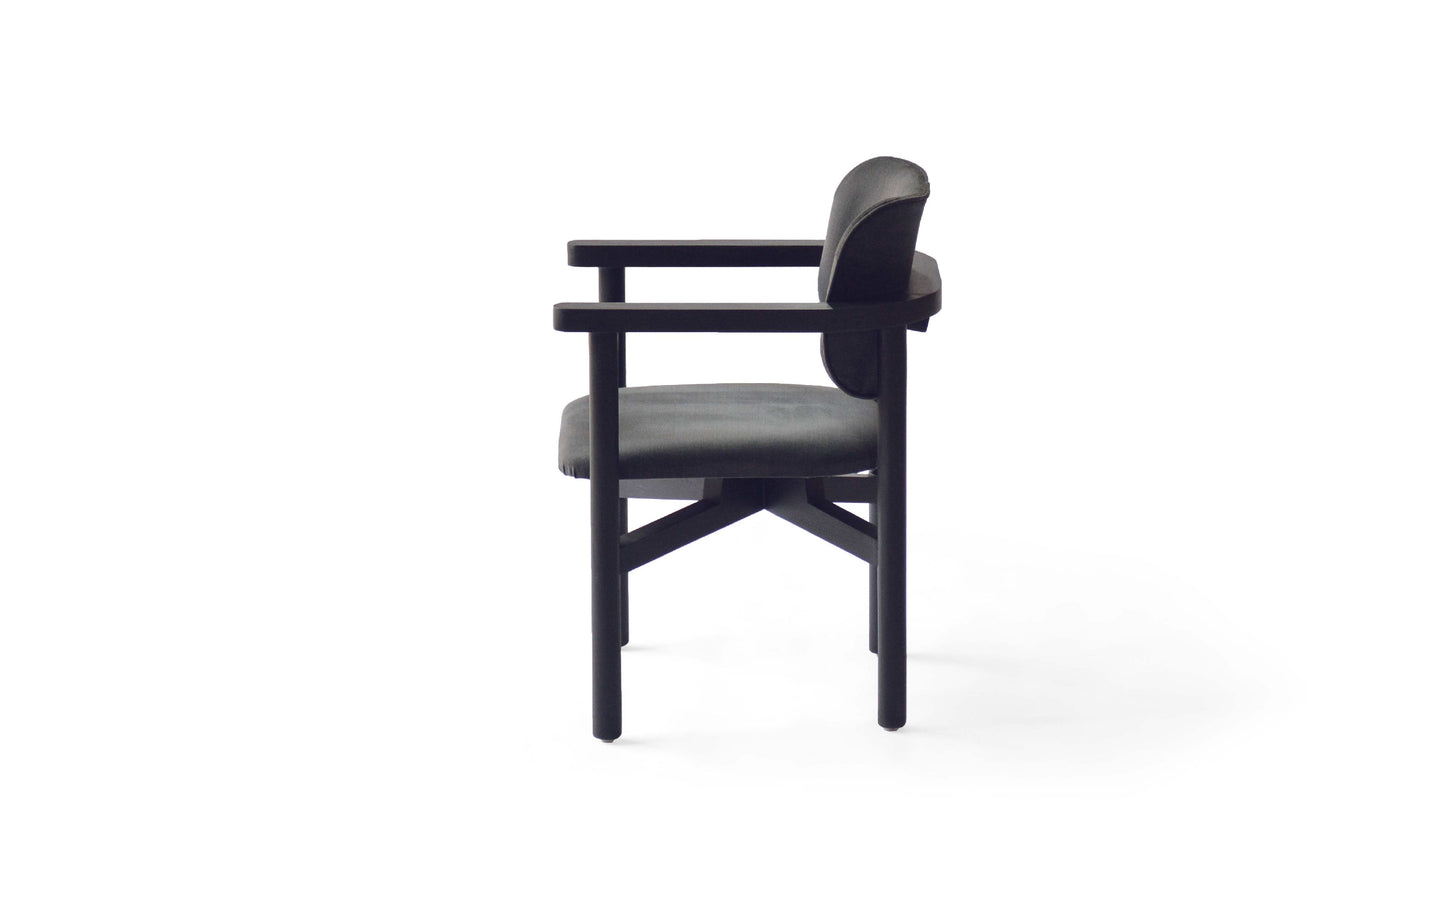 Levitate Black Dining Chair